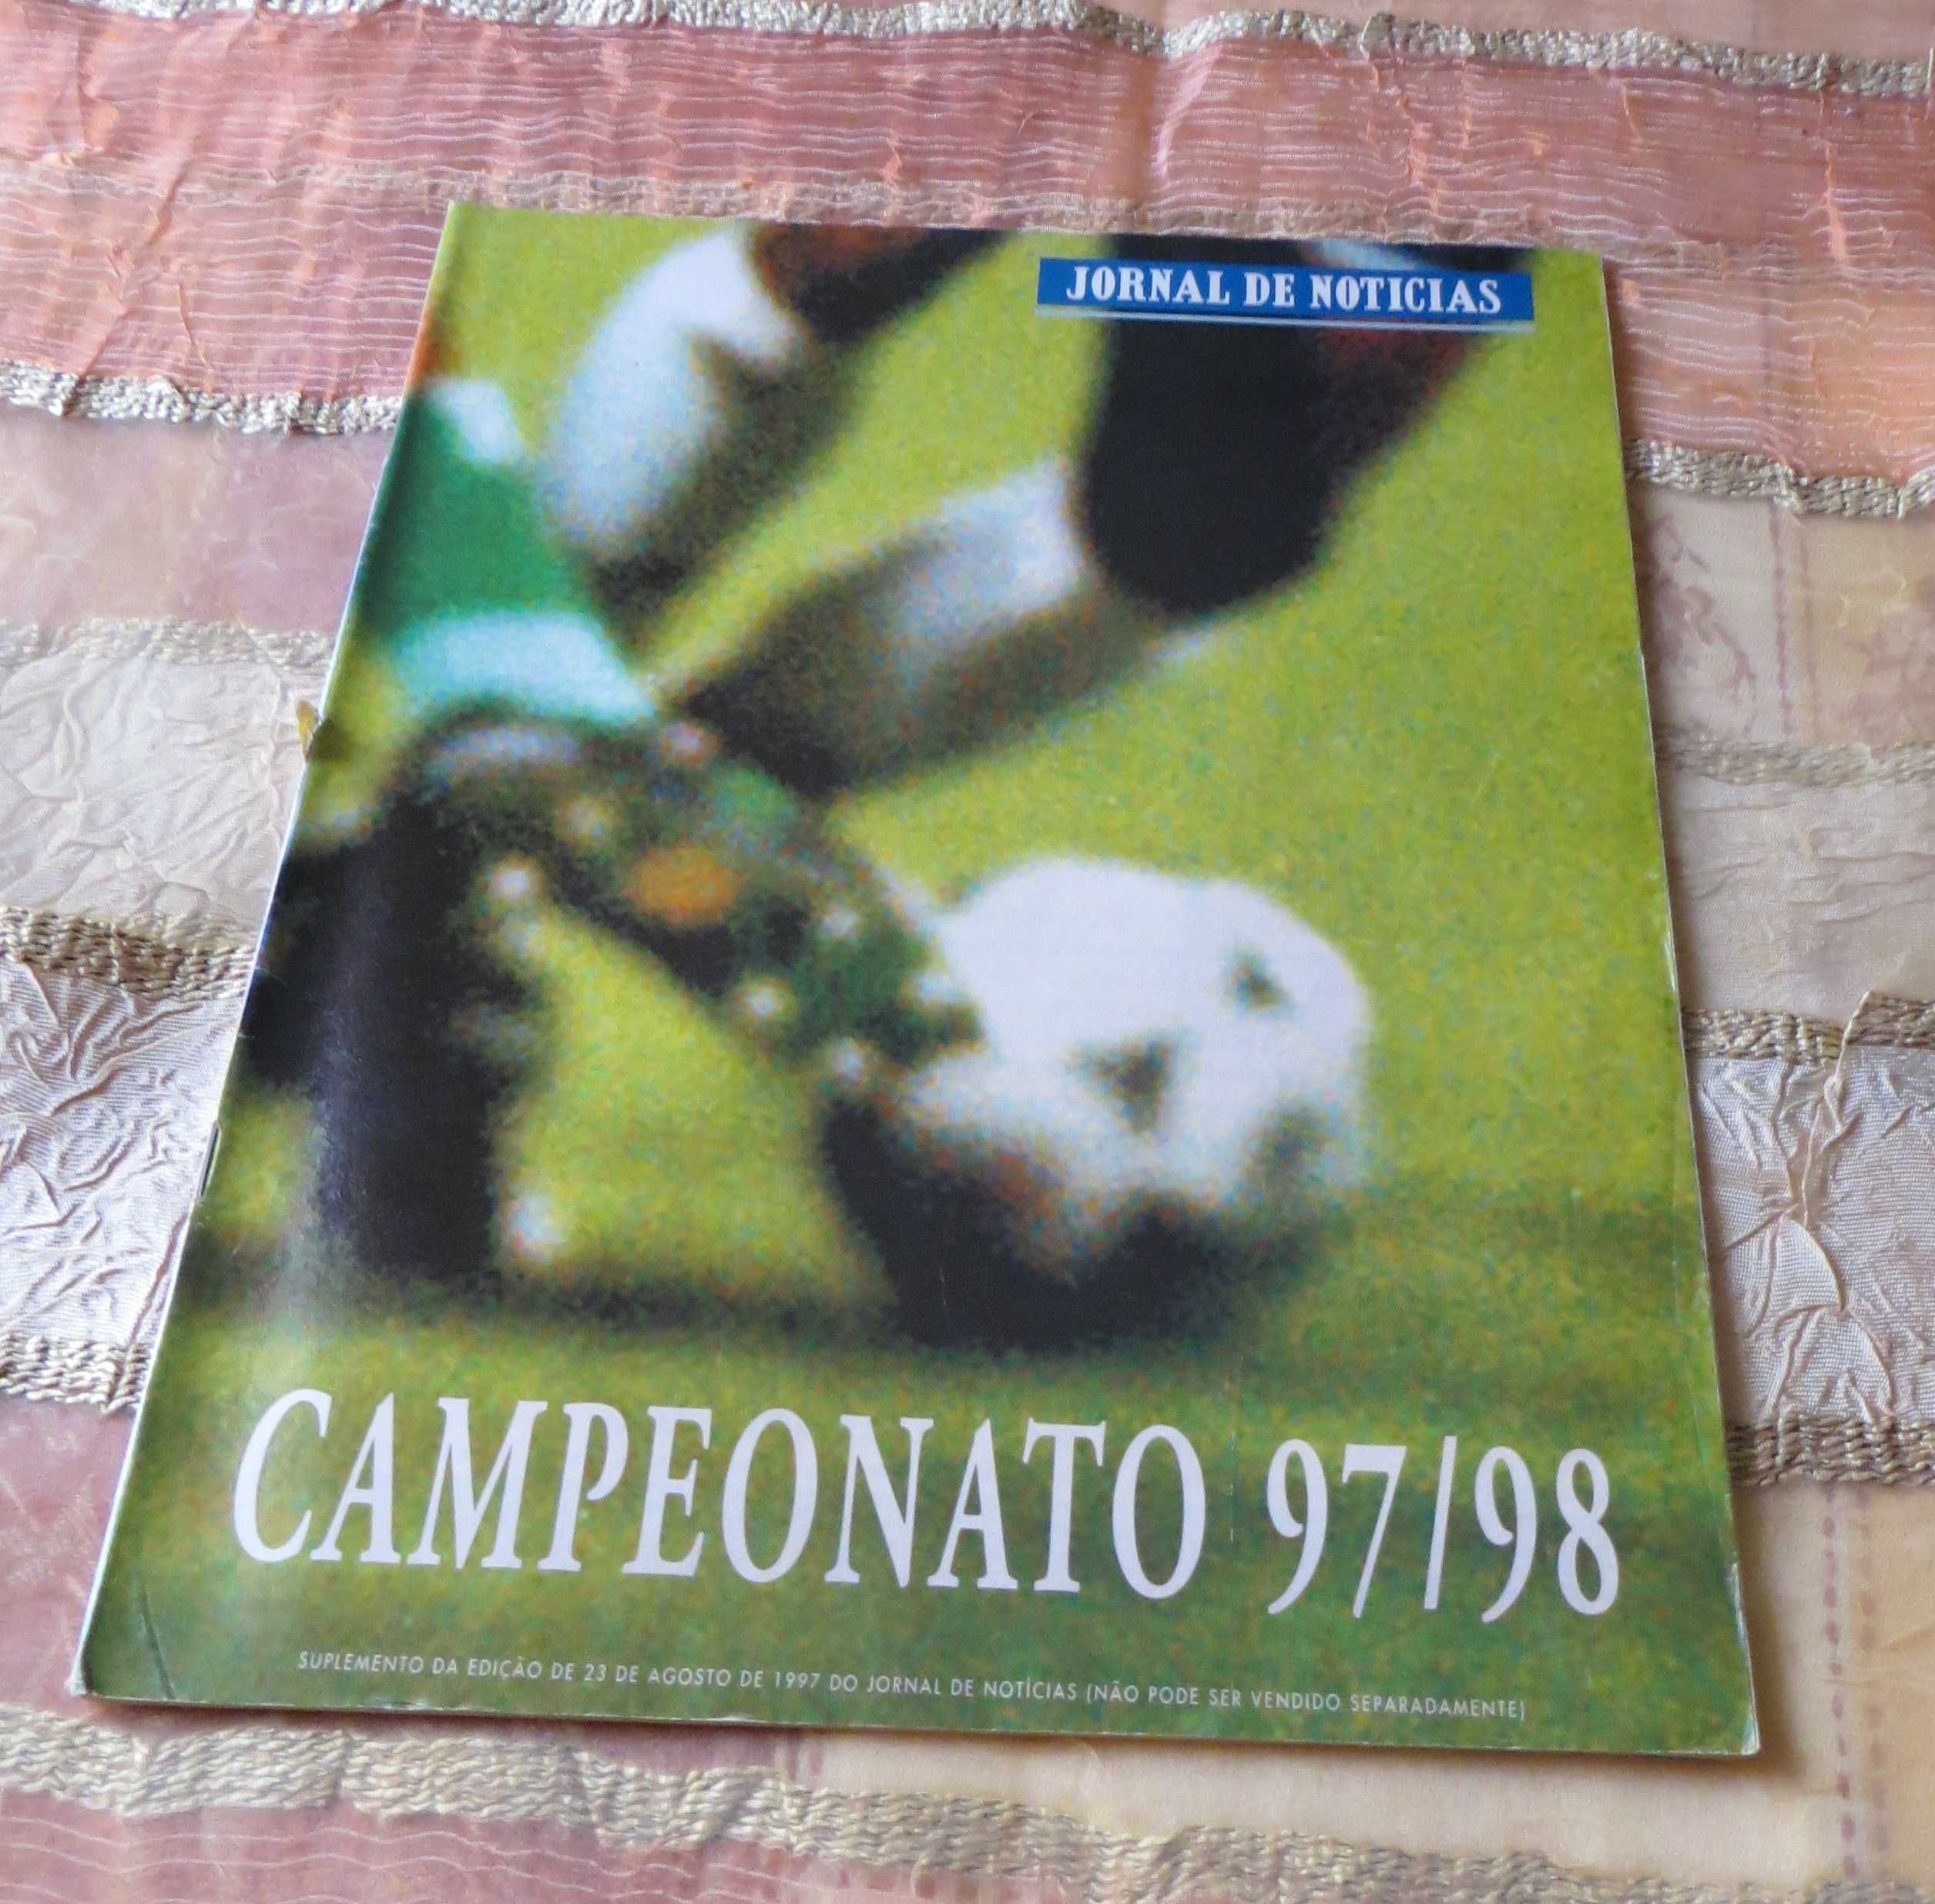 Revista JN Campeonato 97/98 - Oferta VHS c/ jogos